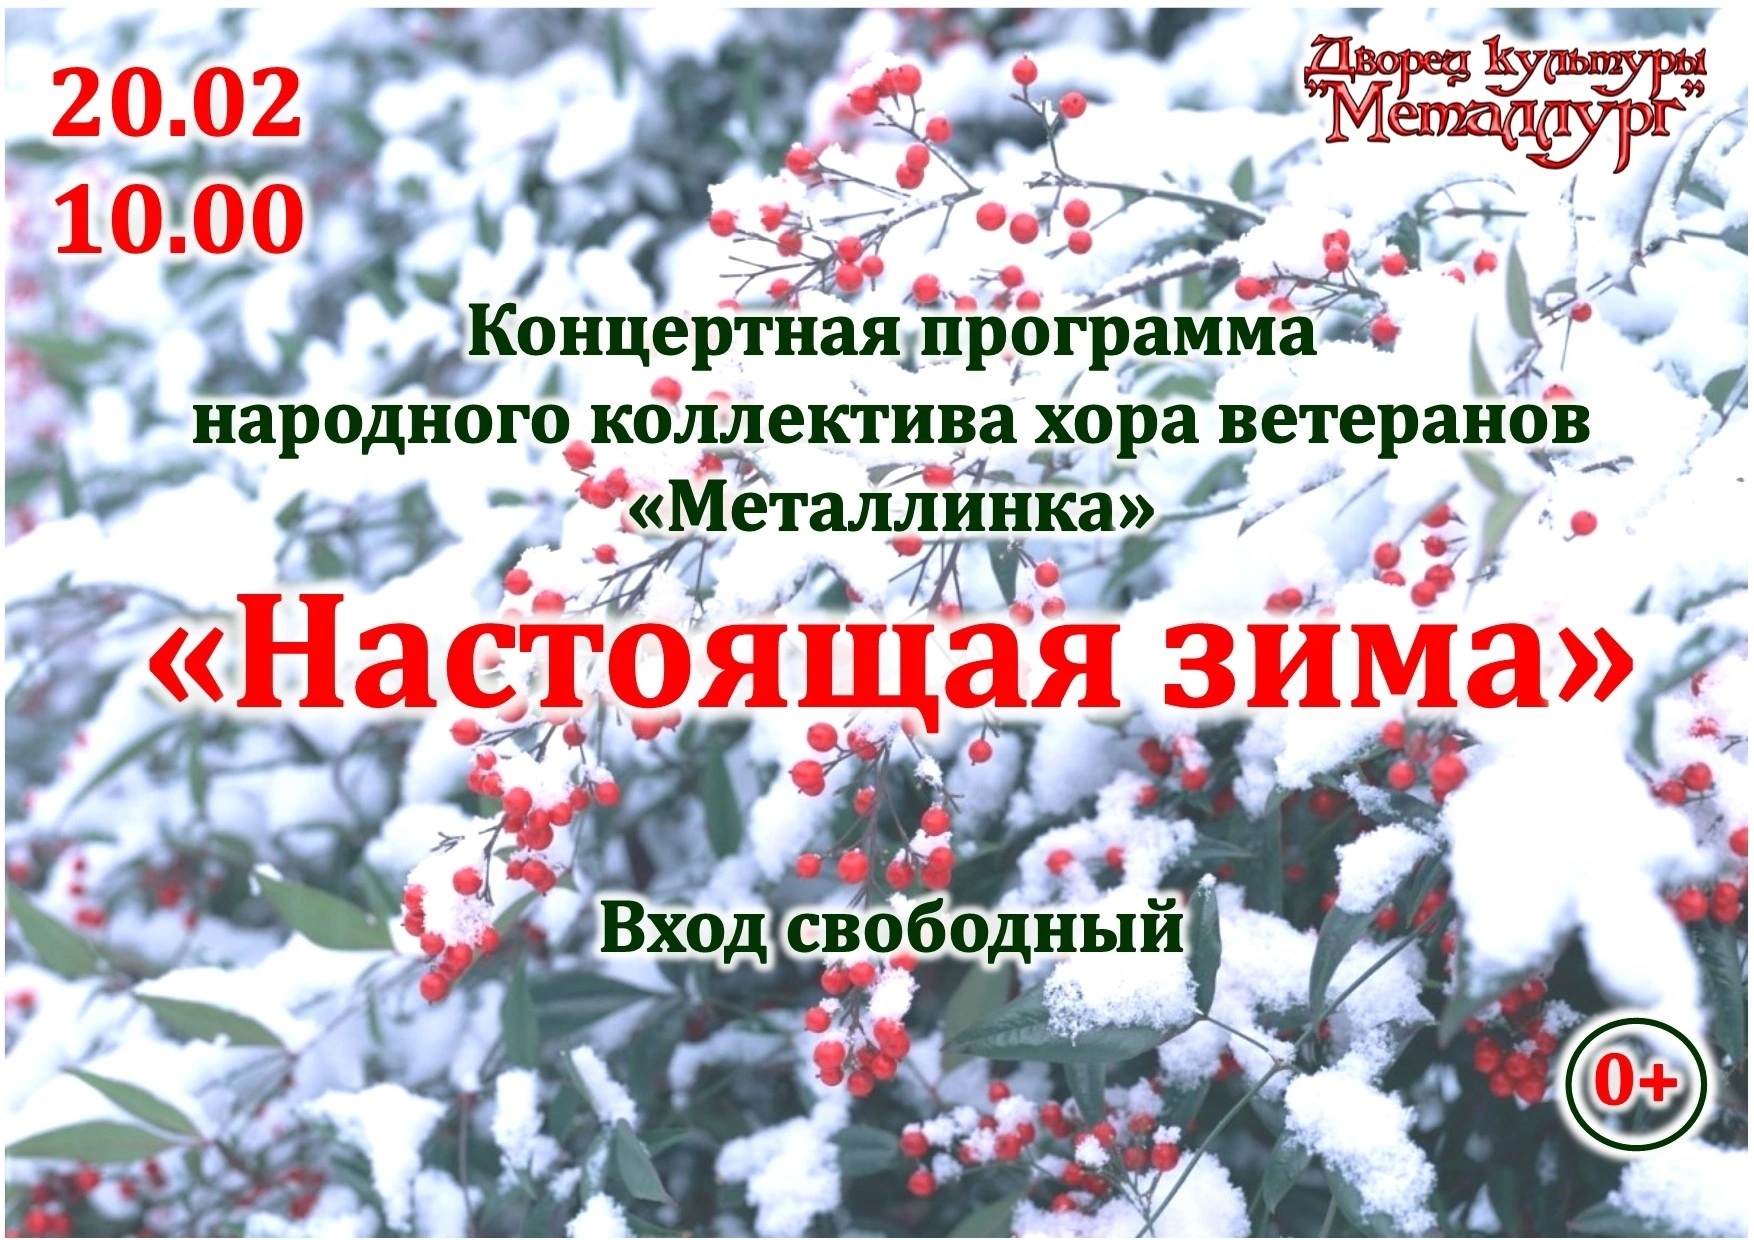 Концертная программа народного коллектива хора ветеранов «Металлинка» - «Настоящая зима» (0+).